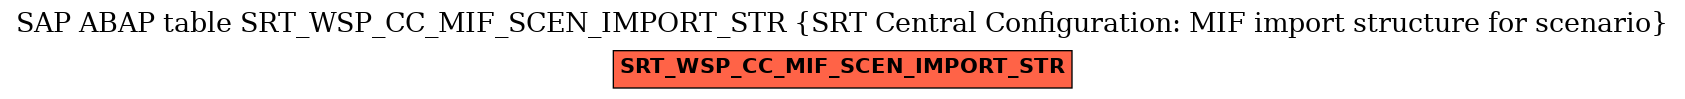 E-R Diagram for table SRT_WSP_CC_MIF_SCEN_IMPORT_STR (SRT Central Configuration: MIF import structure for scenario)